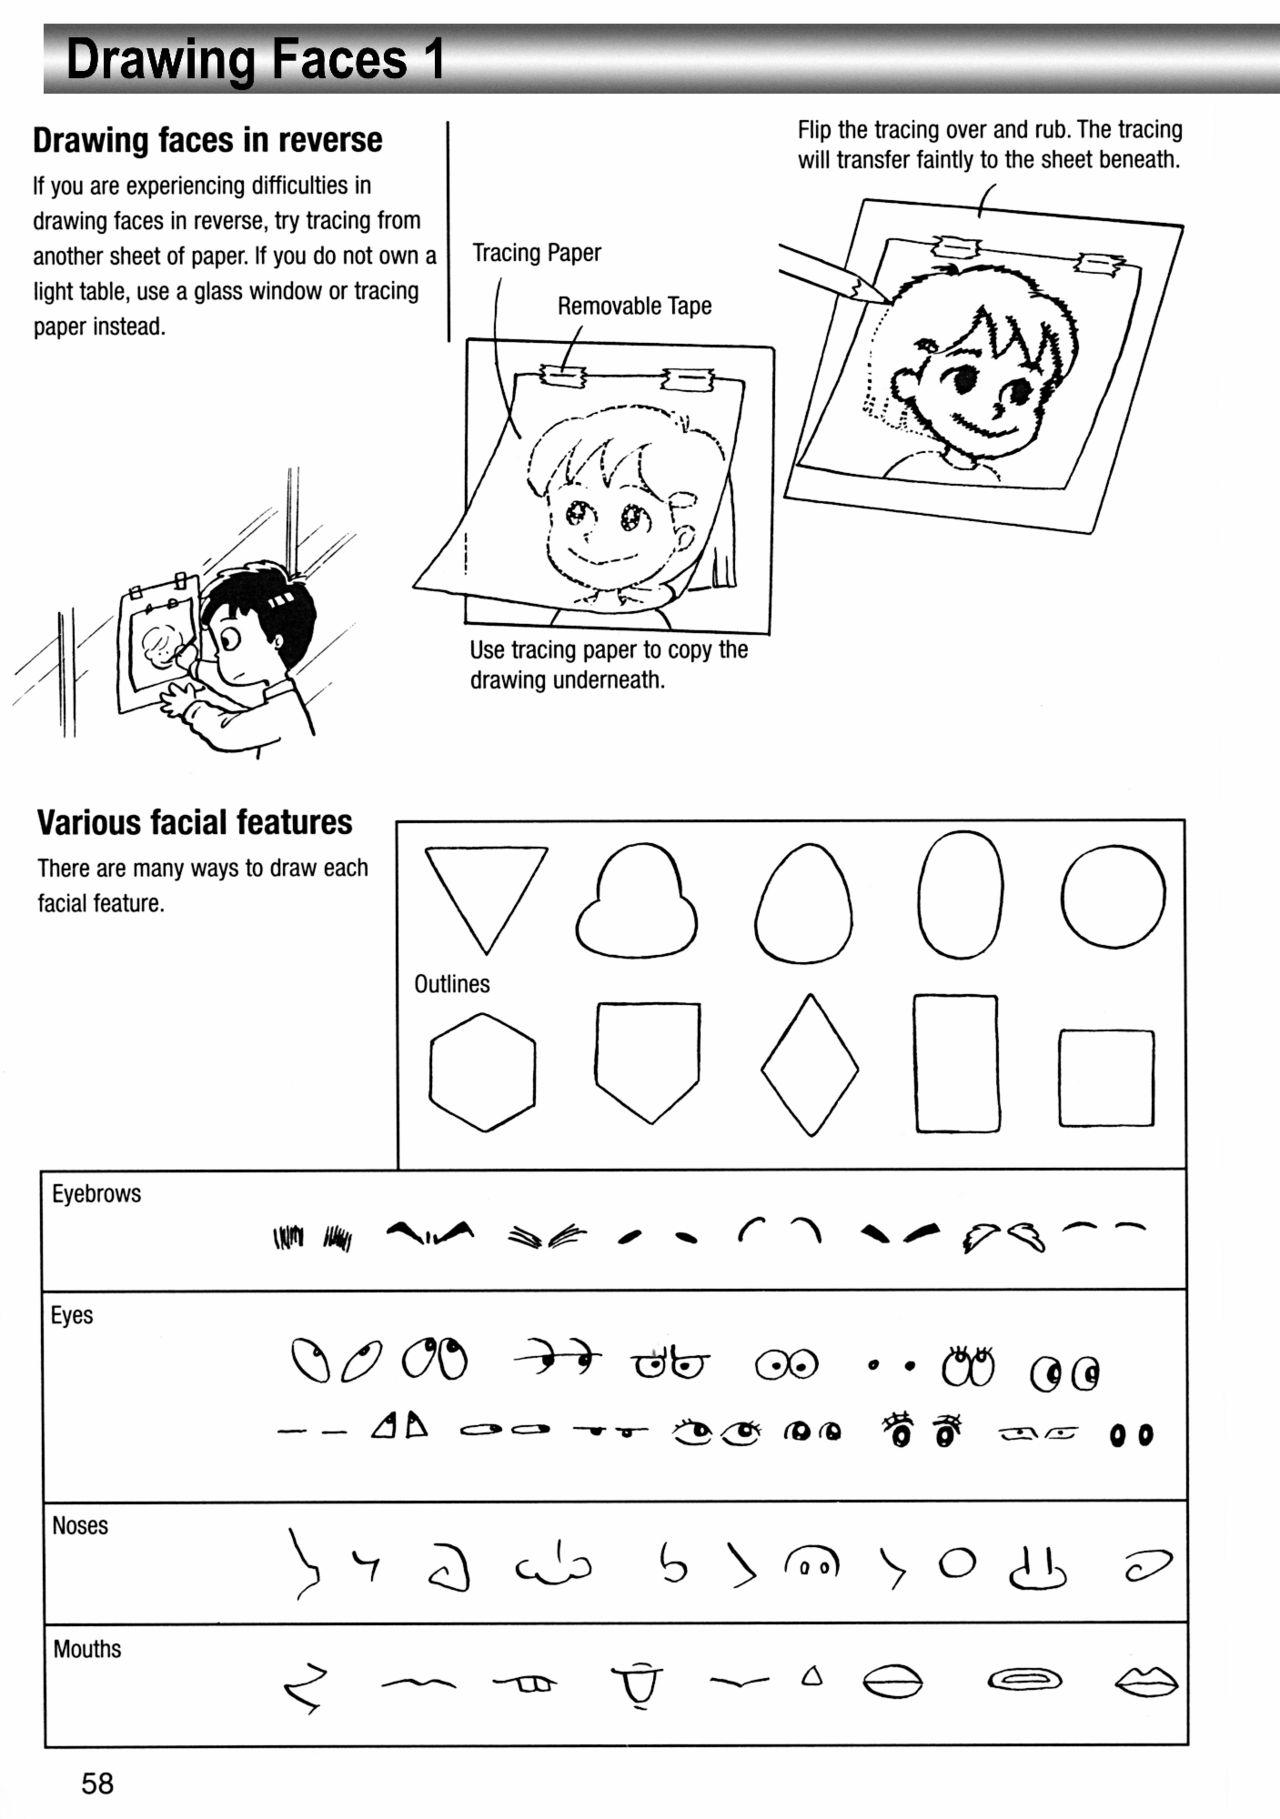 How to Draw Manga Vol. 8 - Super Basics by Angel Matsumoto 61